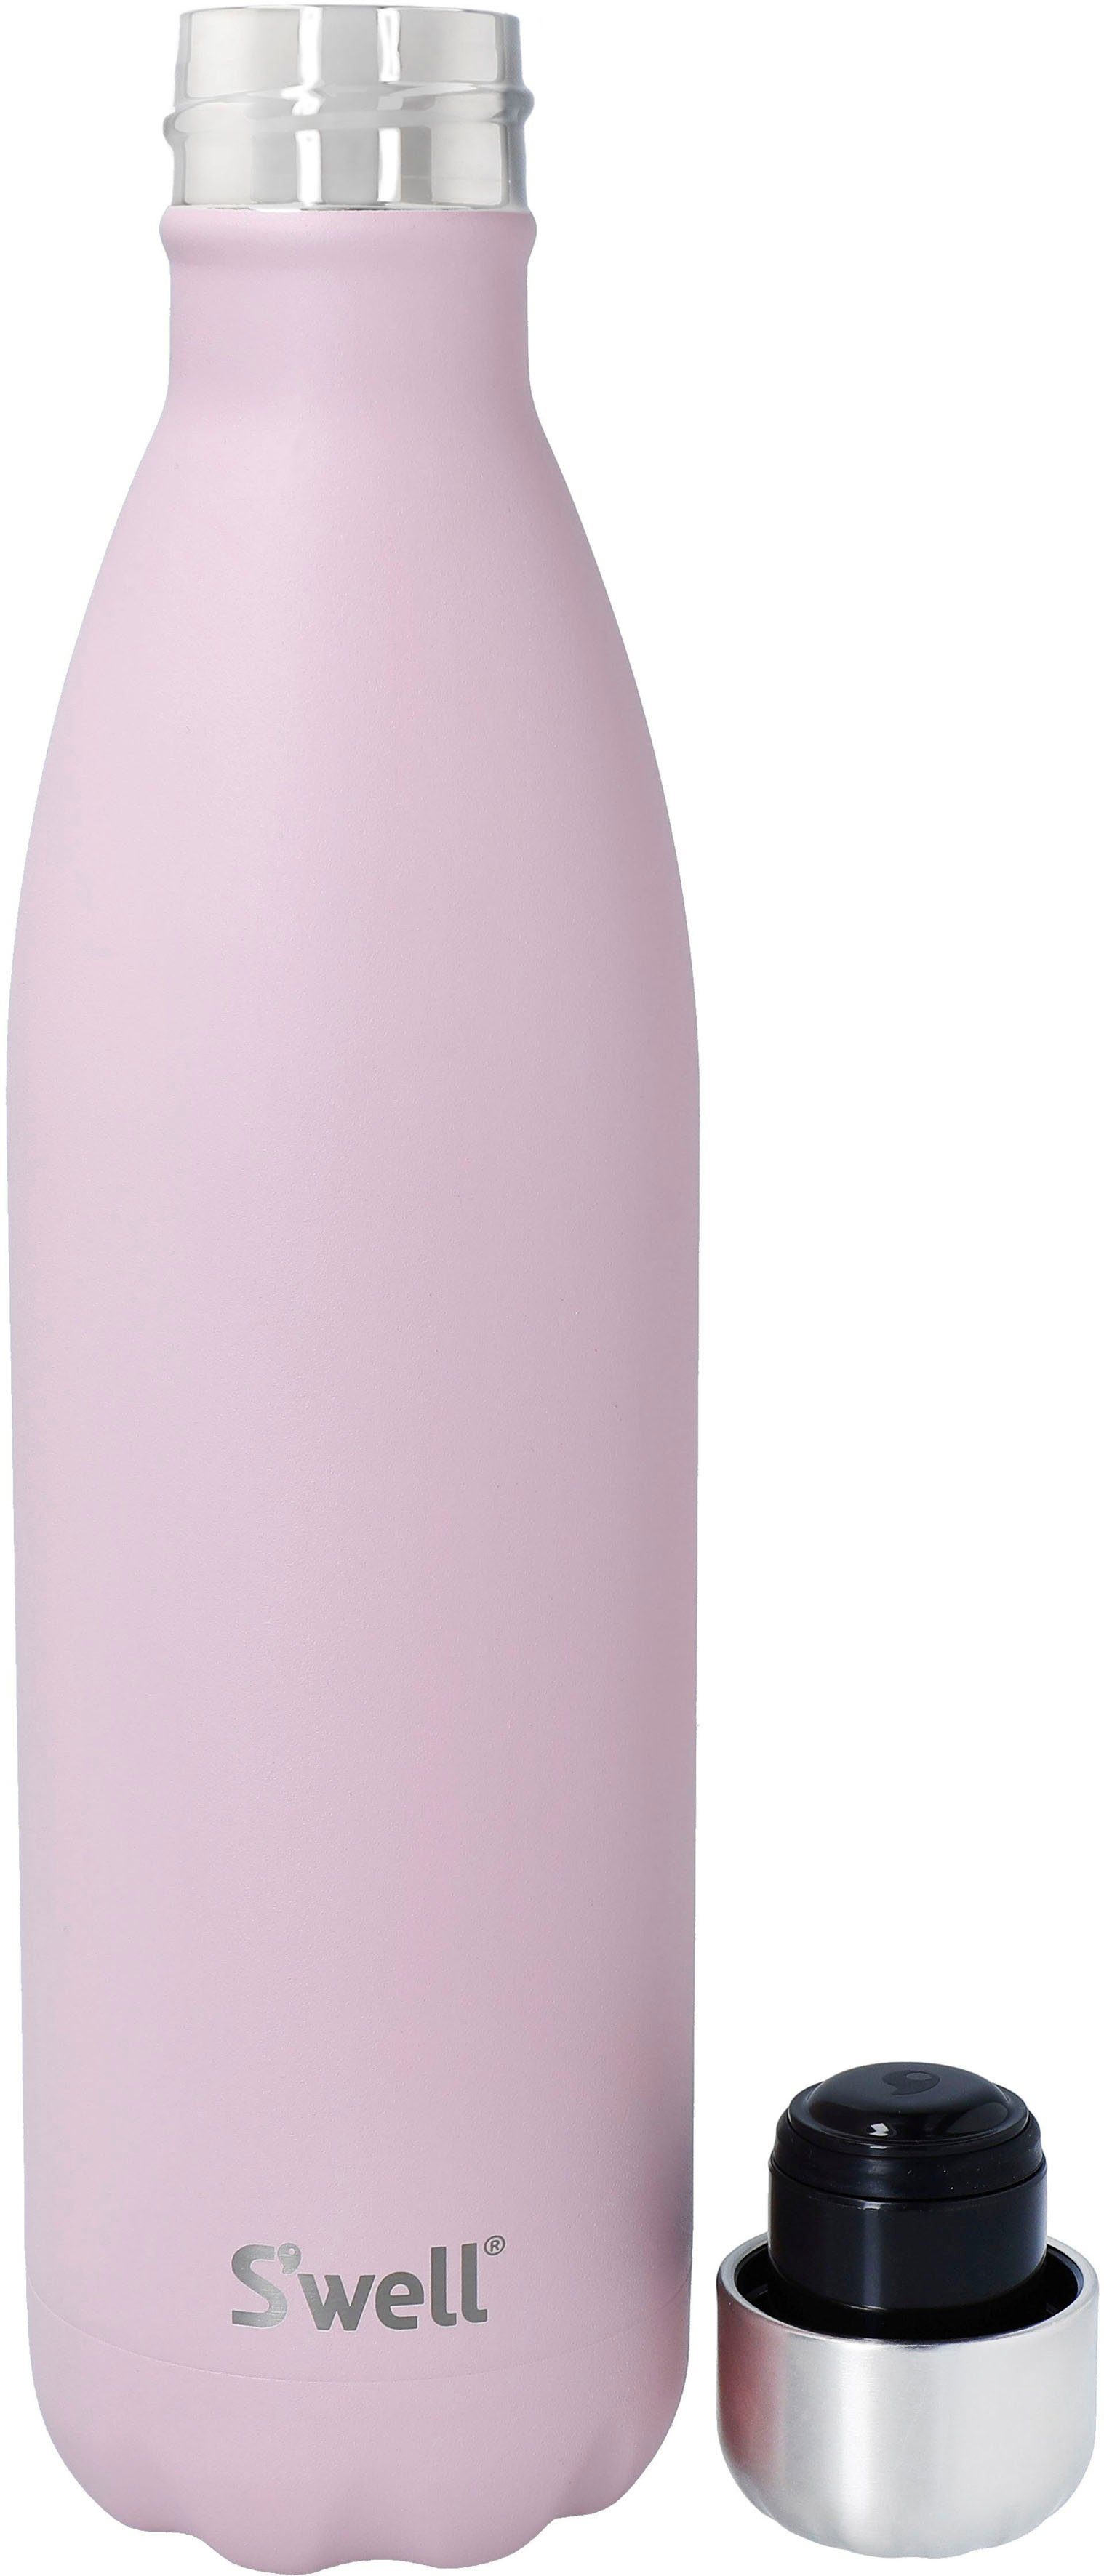 ml Isolierflasche S'well Pink Topaz 750 S'well Topaz,